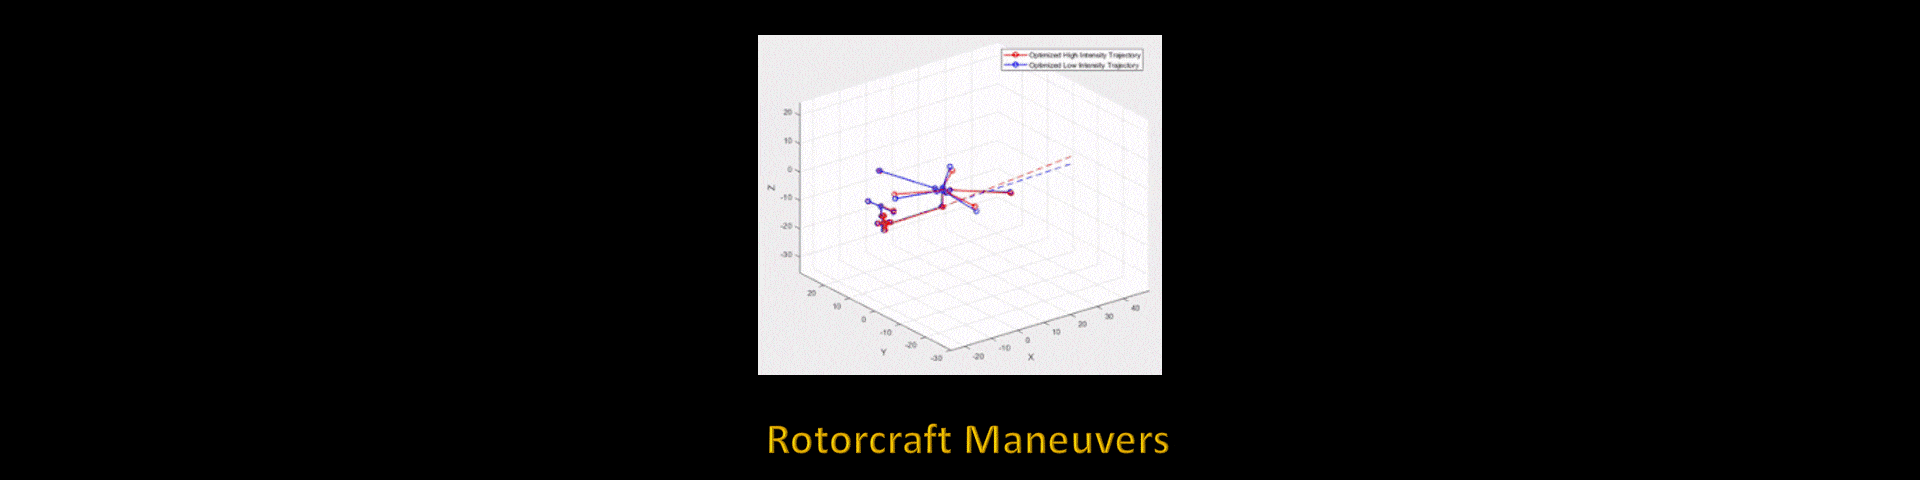 Rotorcraft Maneuvers